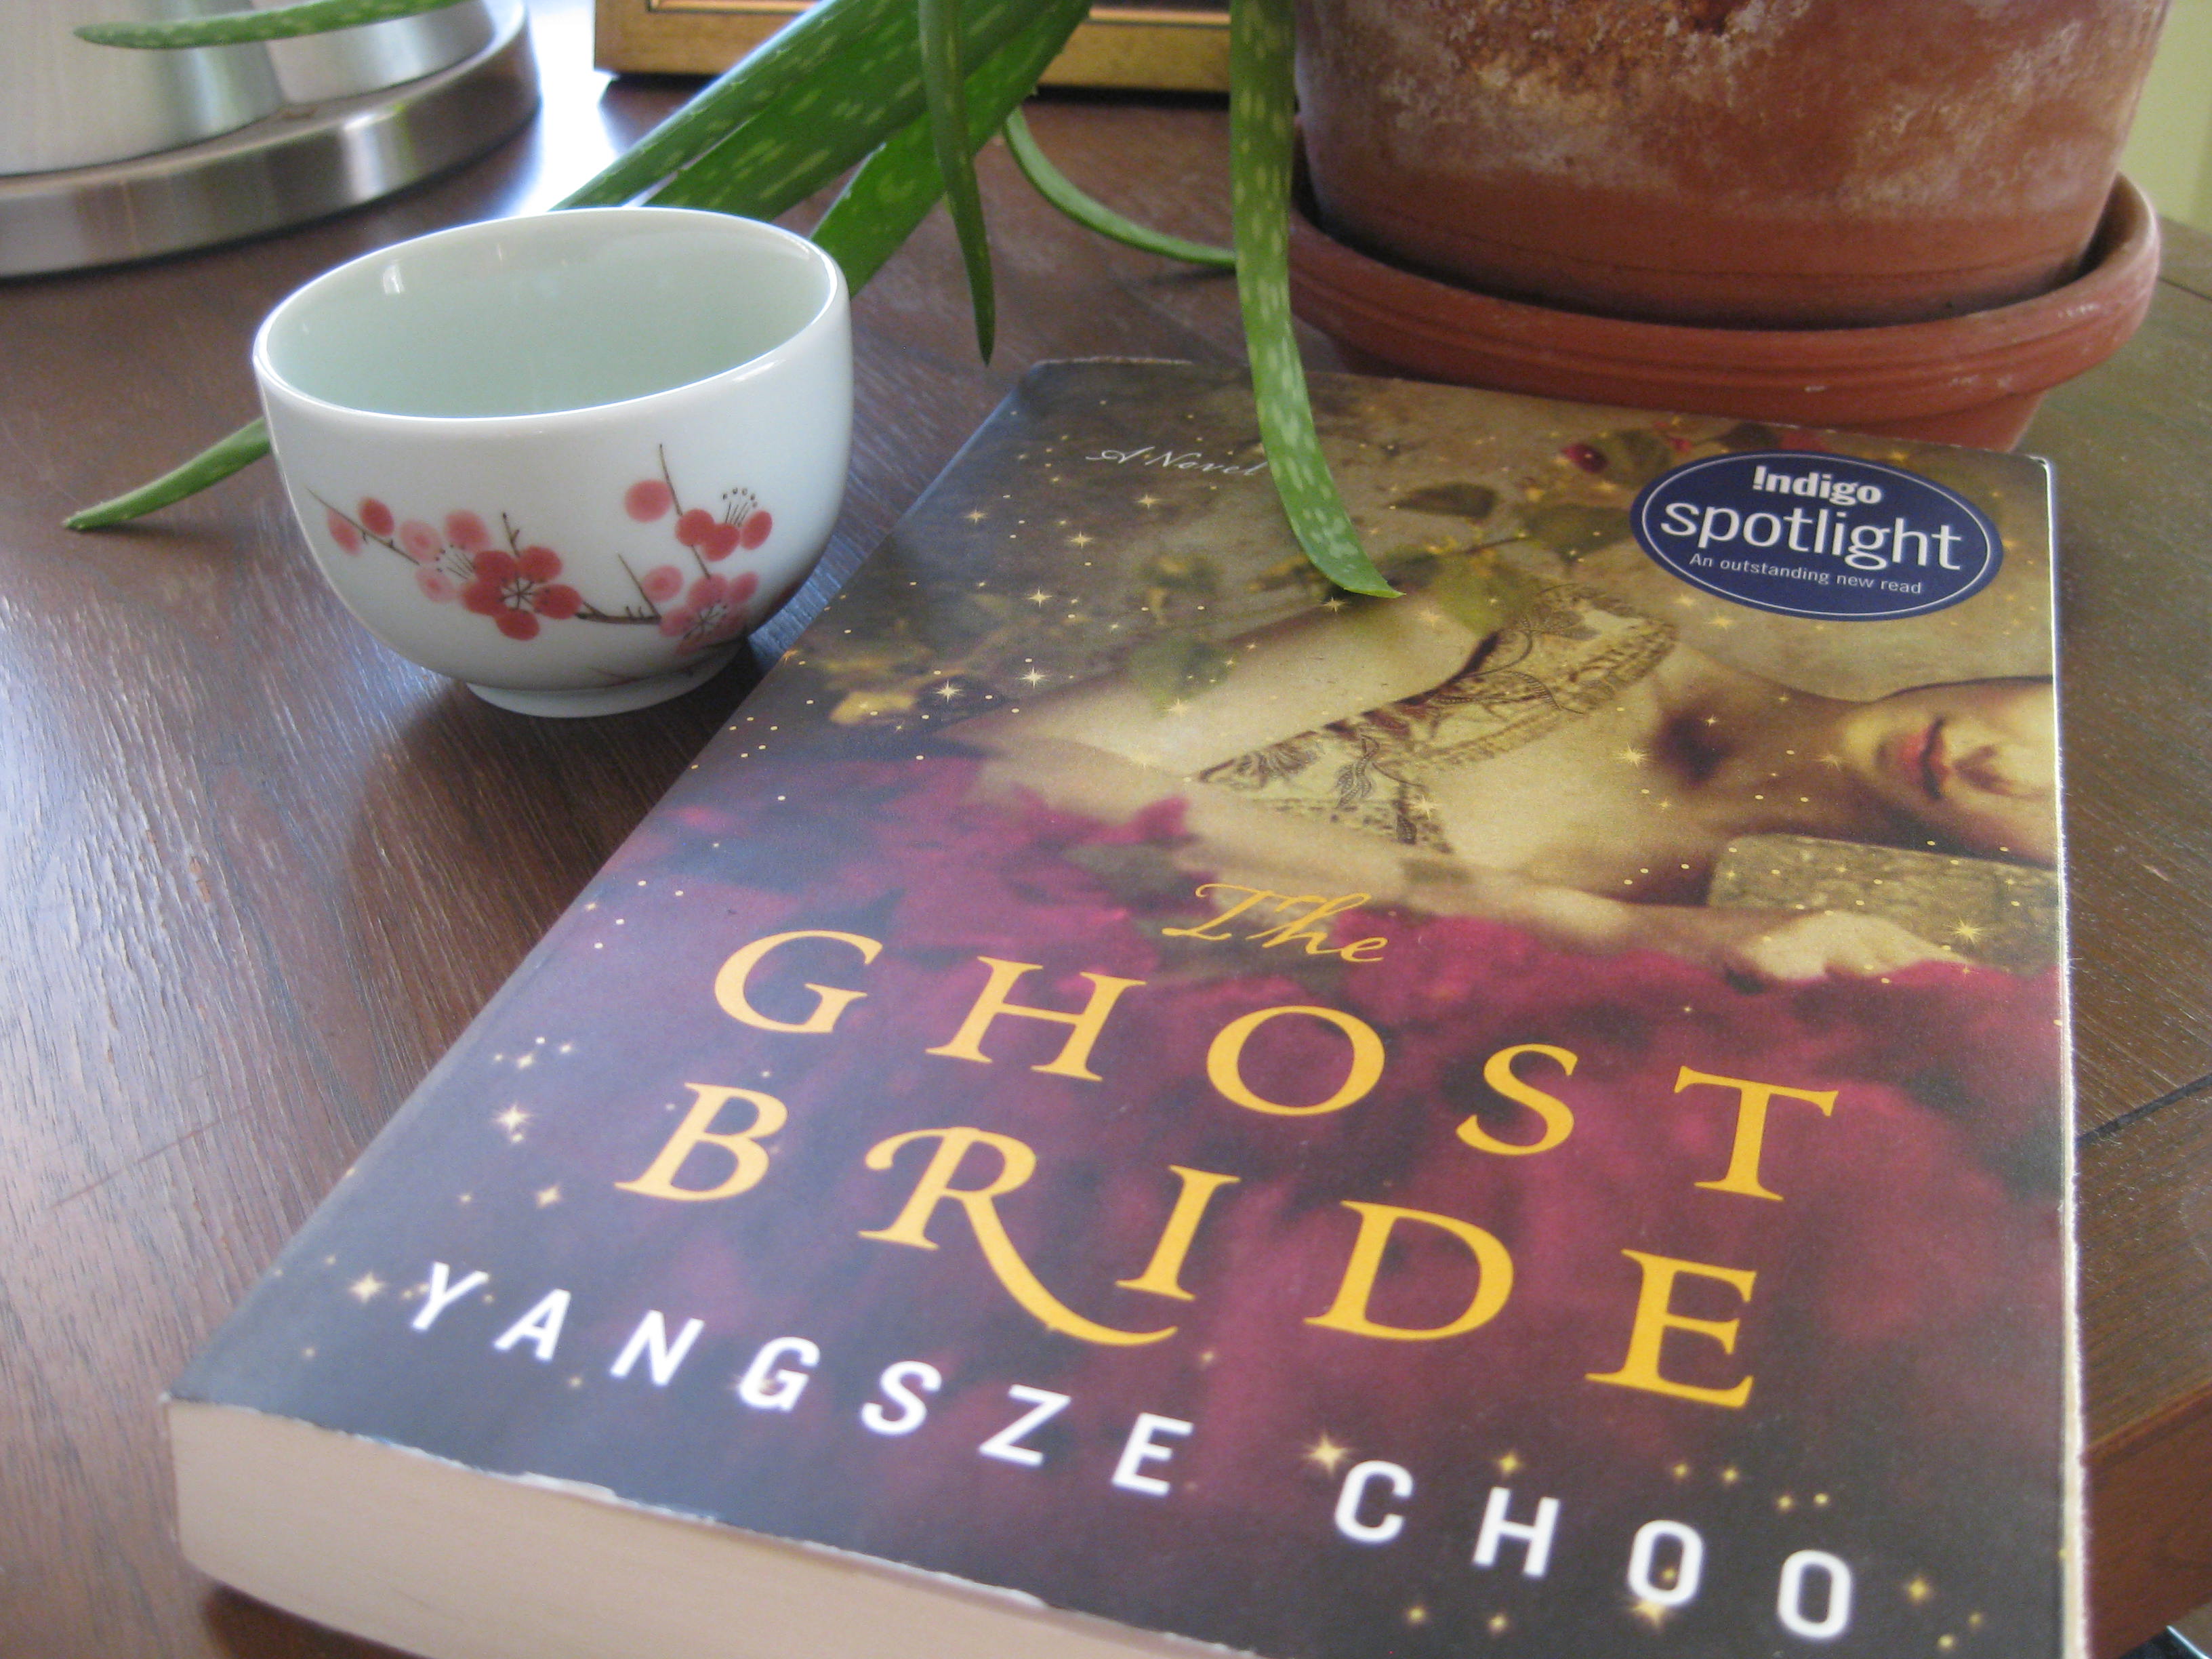 The Ghost Bride by Yangsze Choo